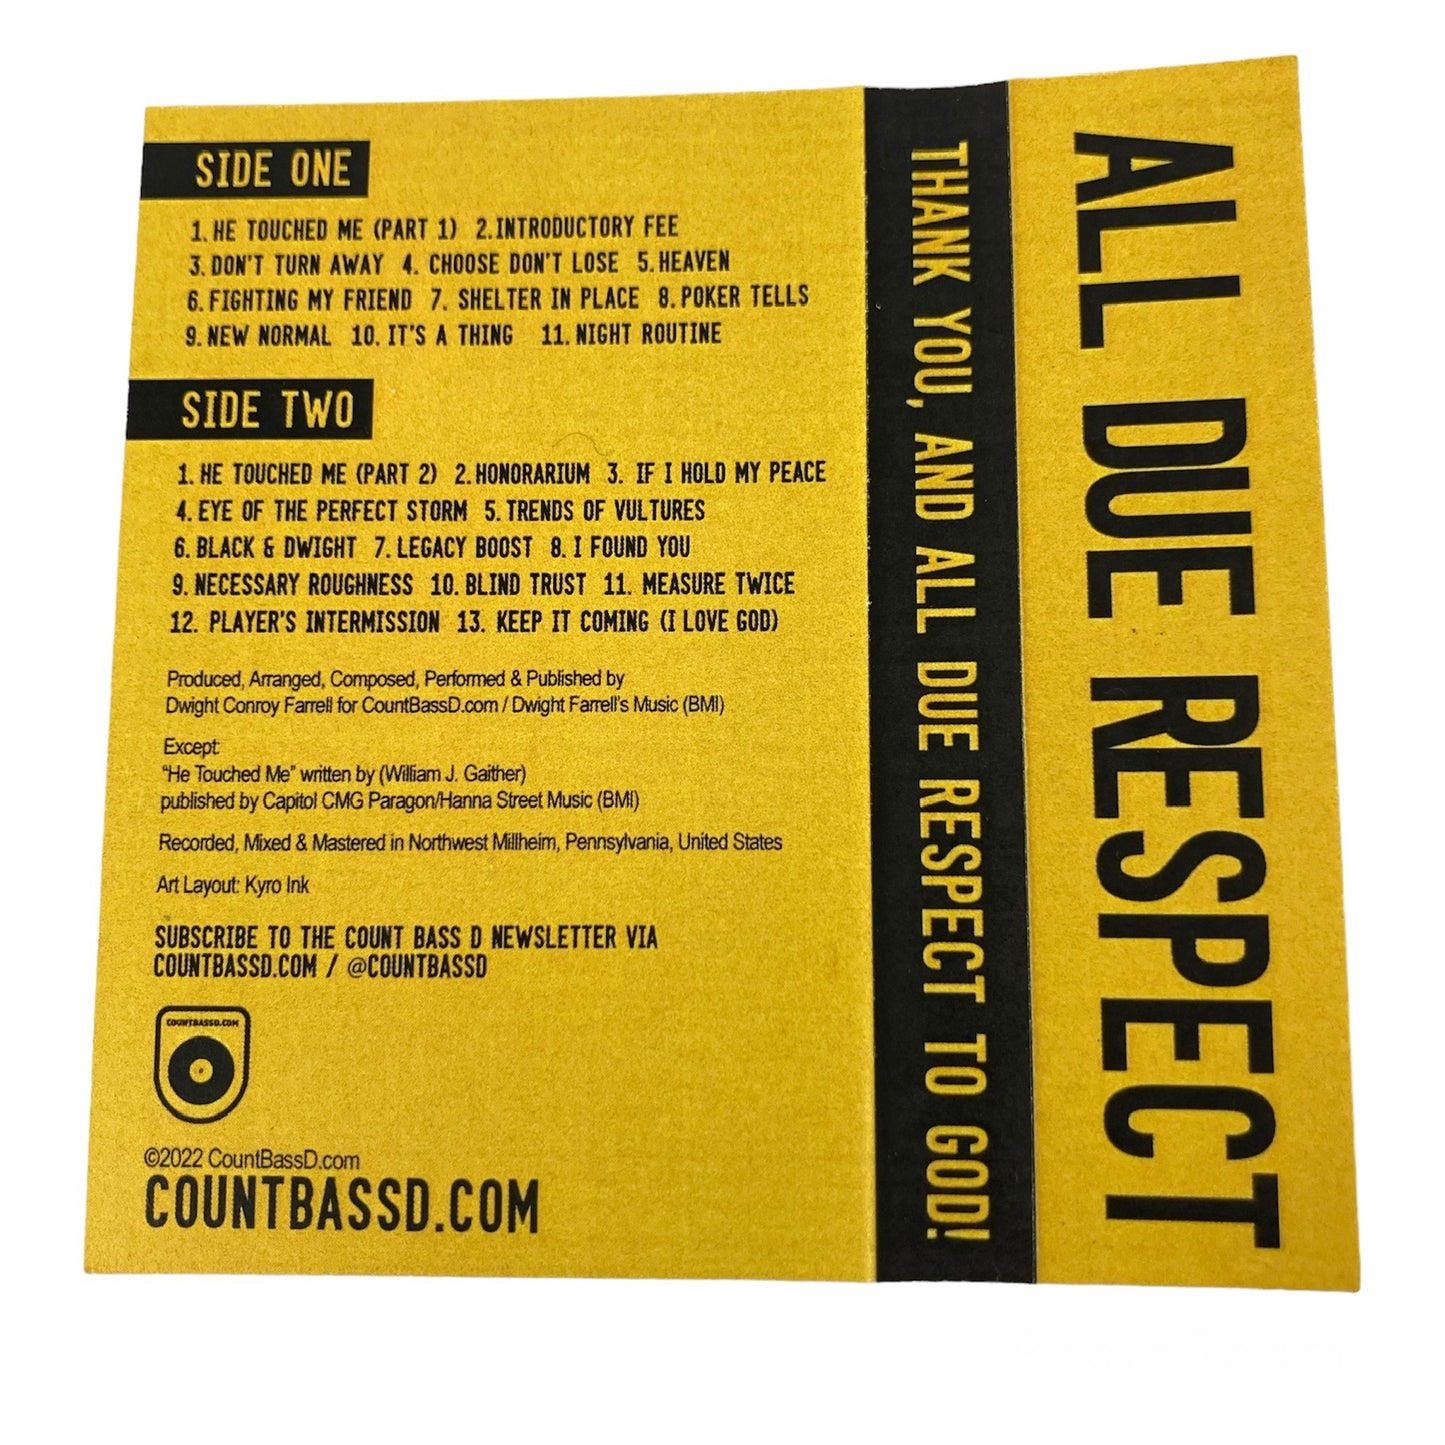 All Due Respect Cassette + Digital Download